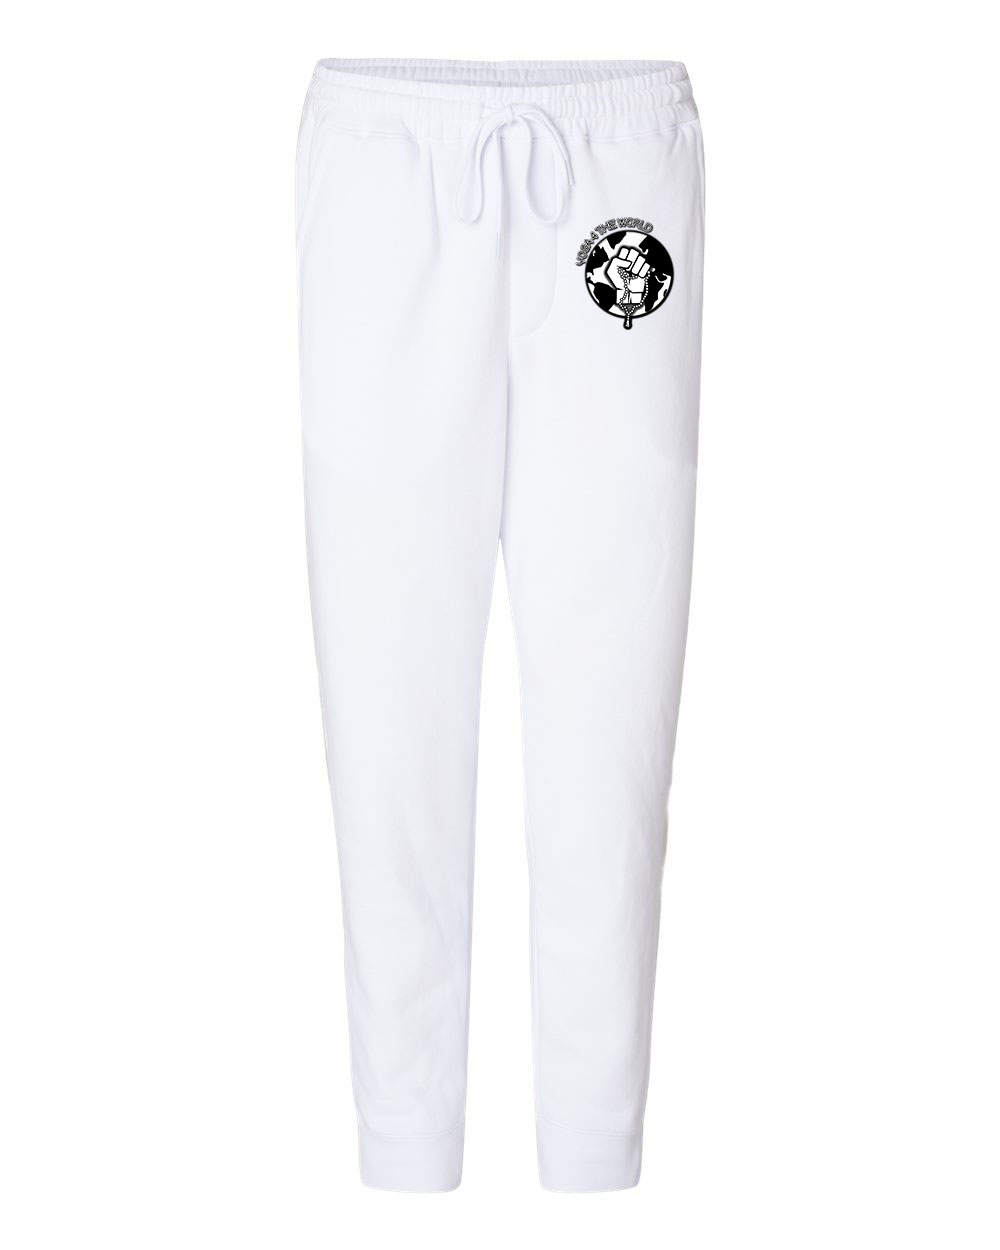 Yoga4TheWorld White Fleece Pants